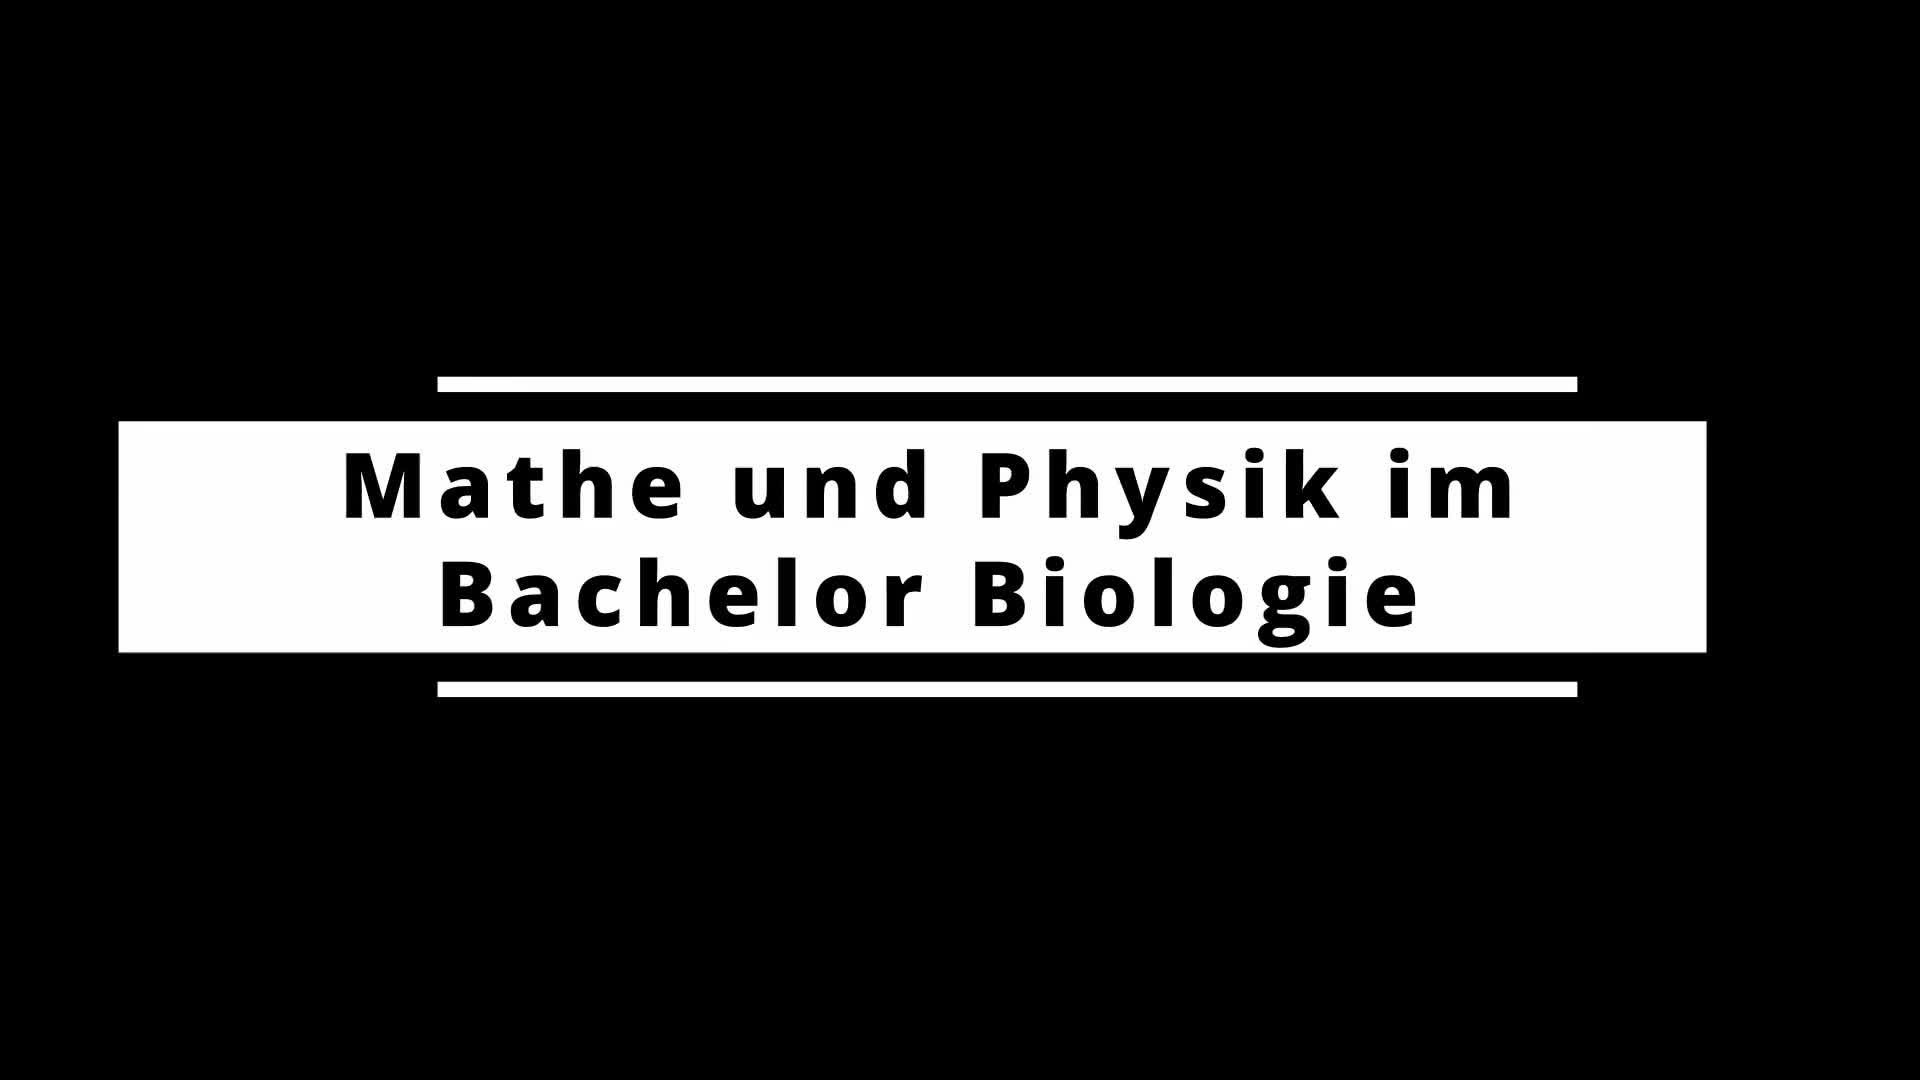 Mathe und Physik im Bachelor Biologie